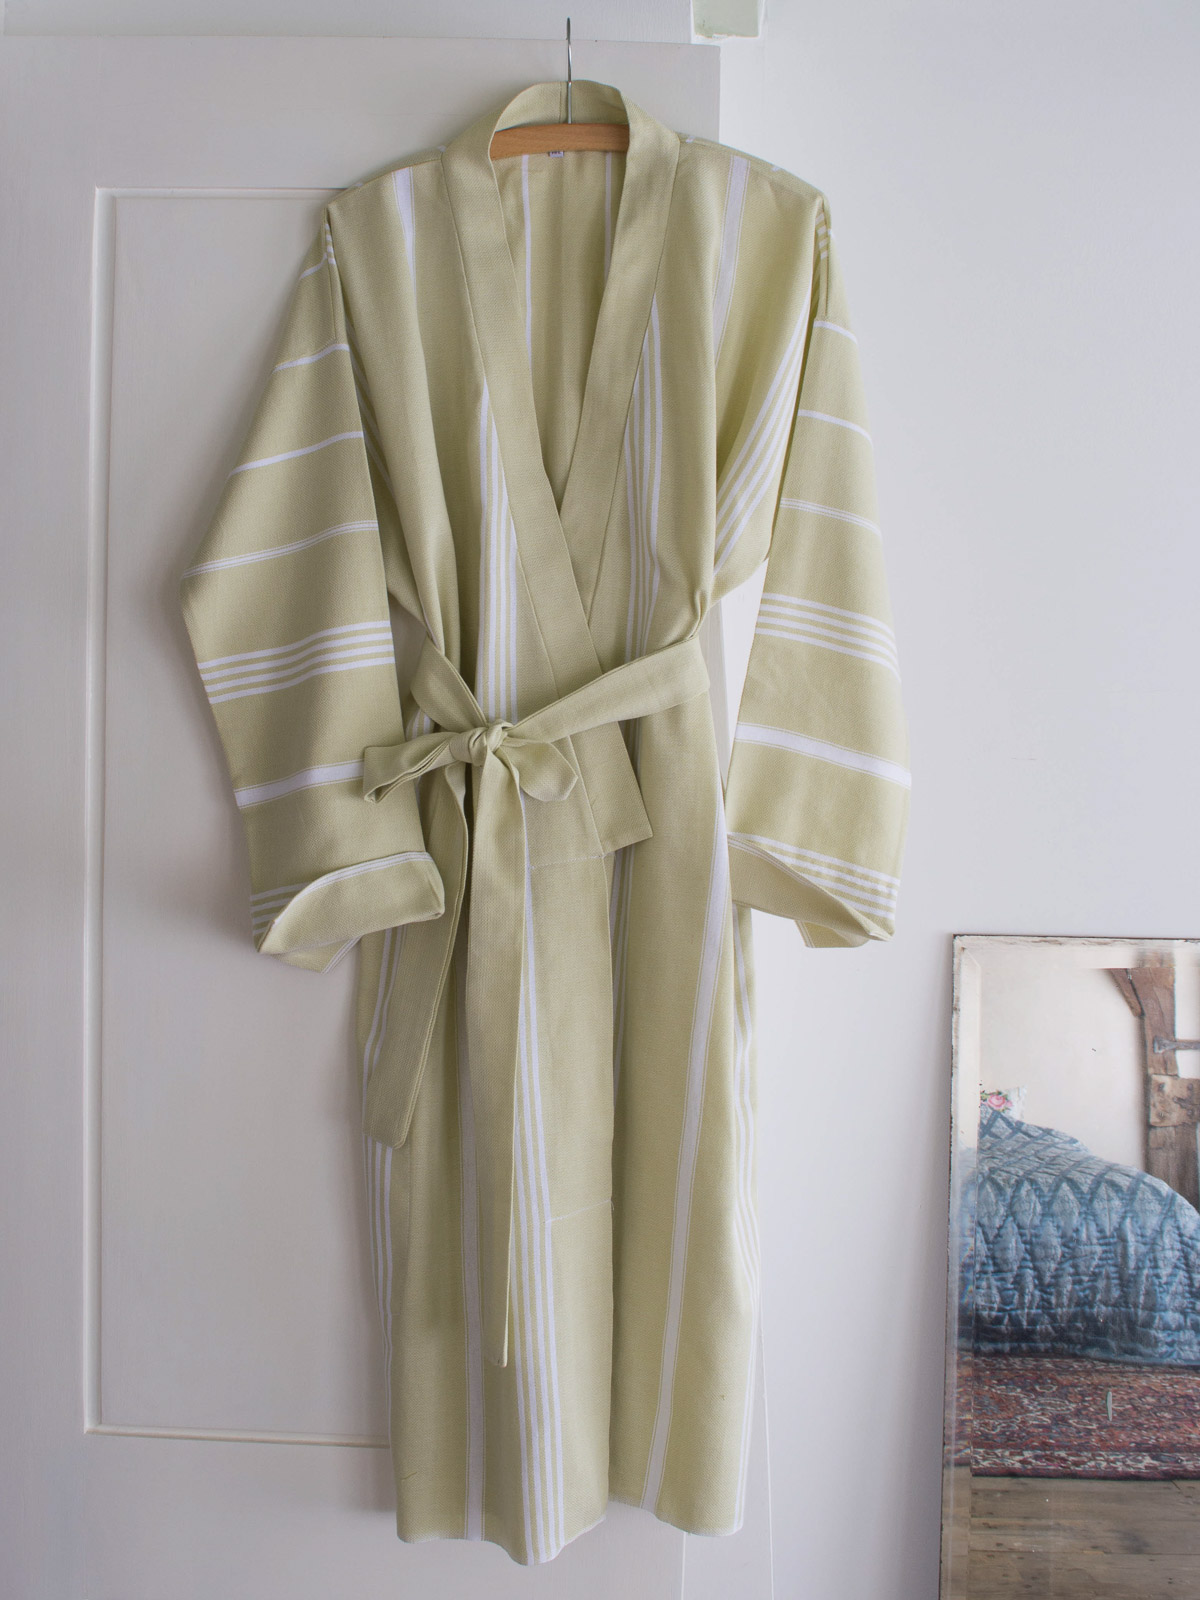 hammam bathrobe size M, linden - hammam towel bathrobe size M ...